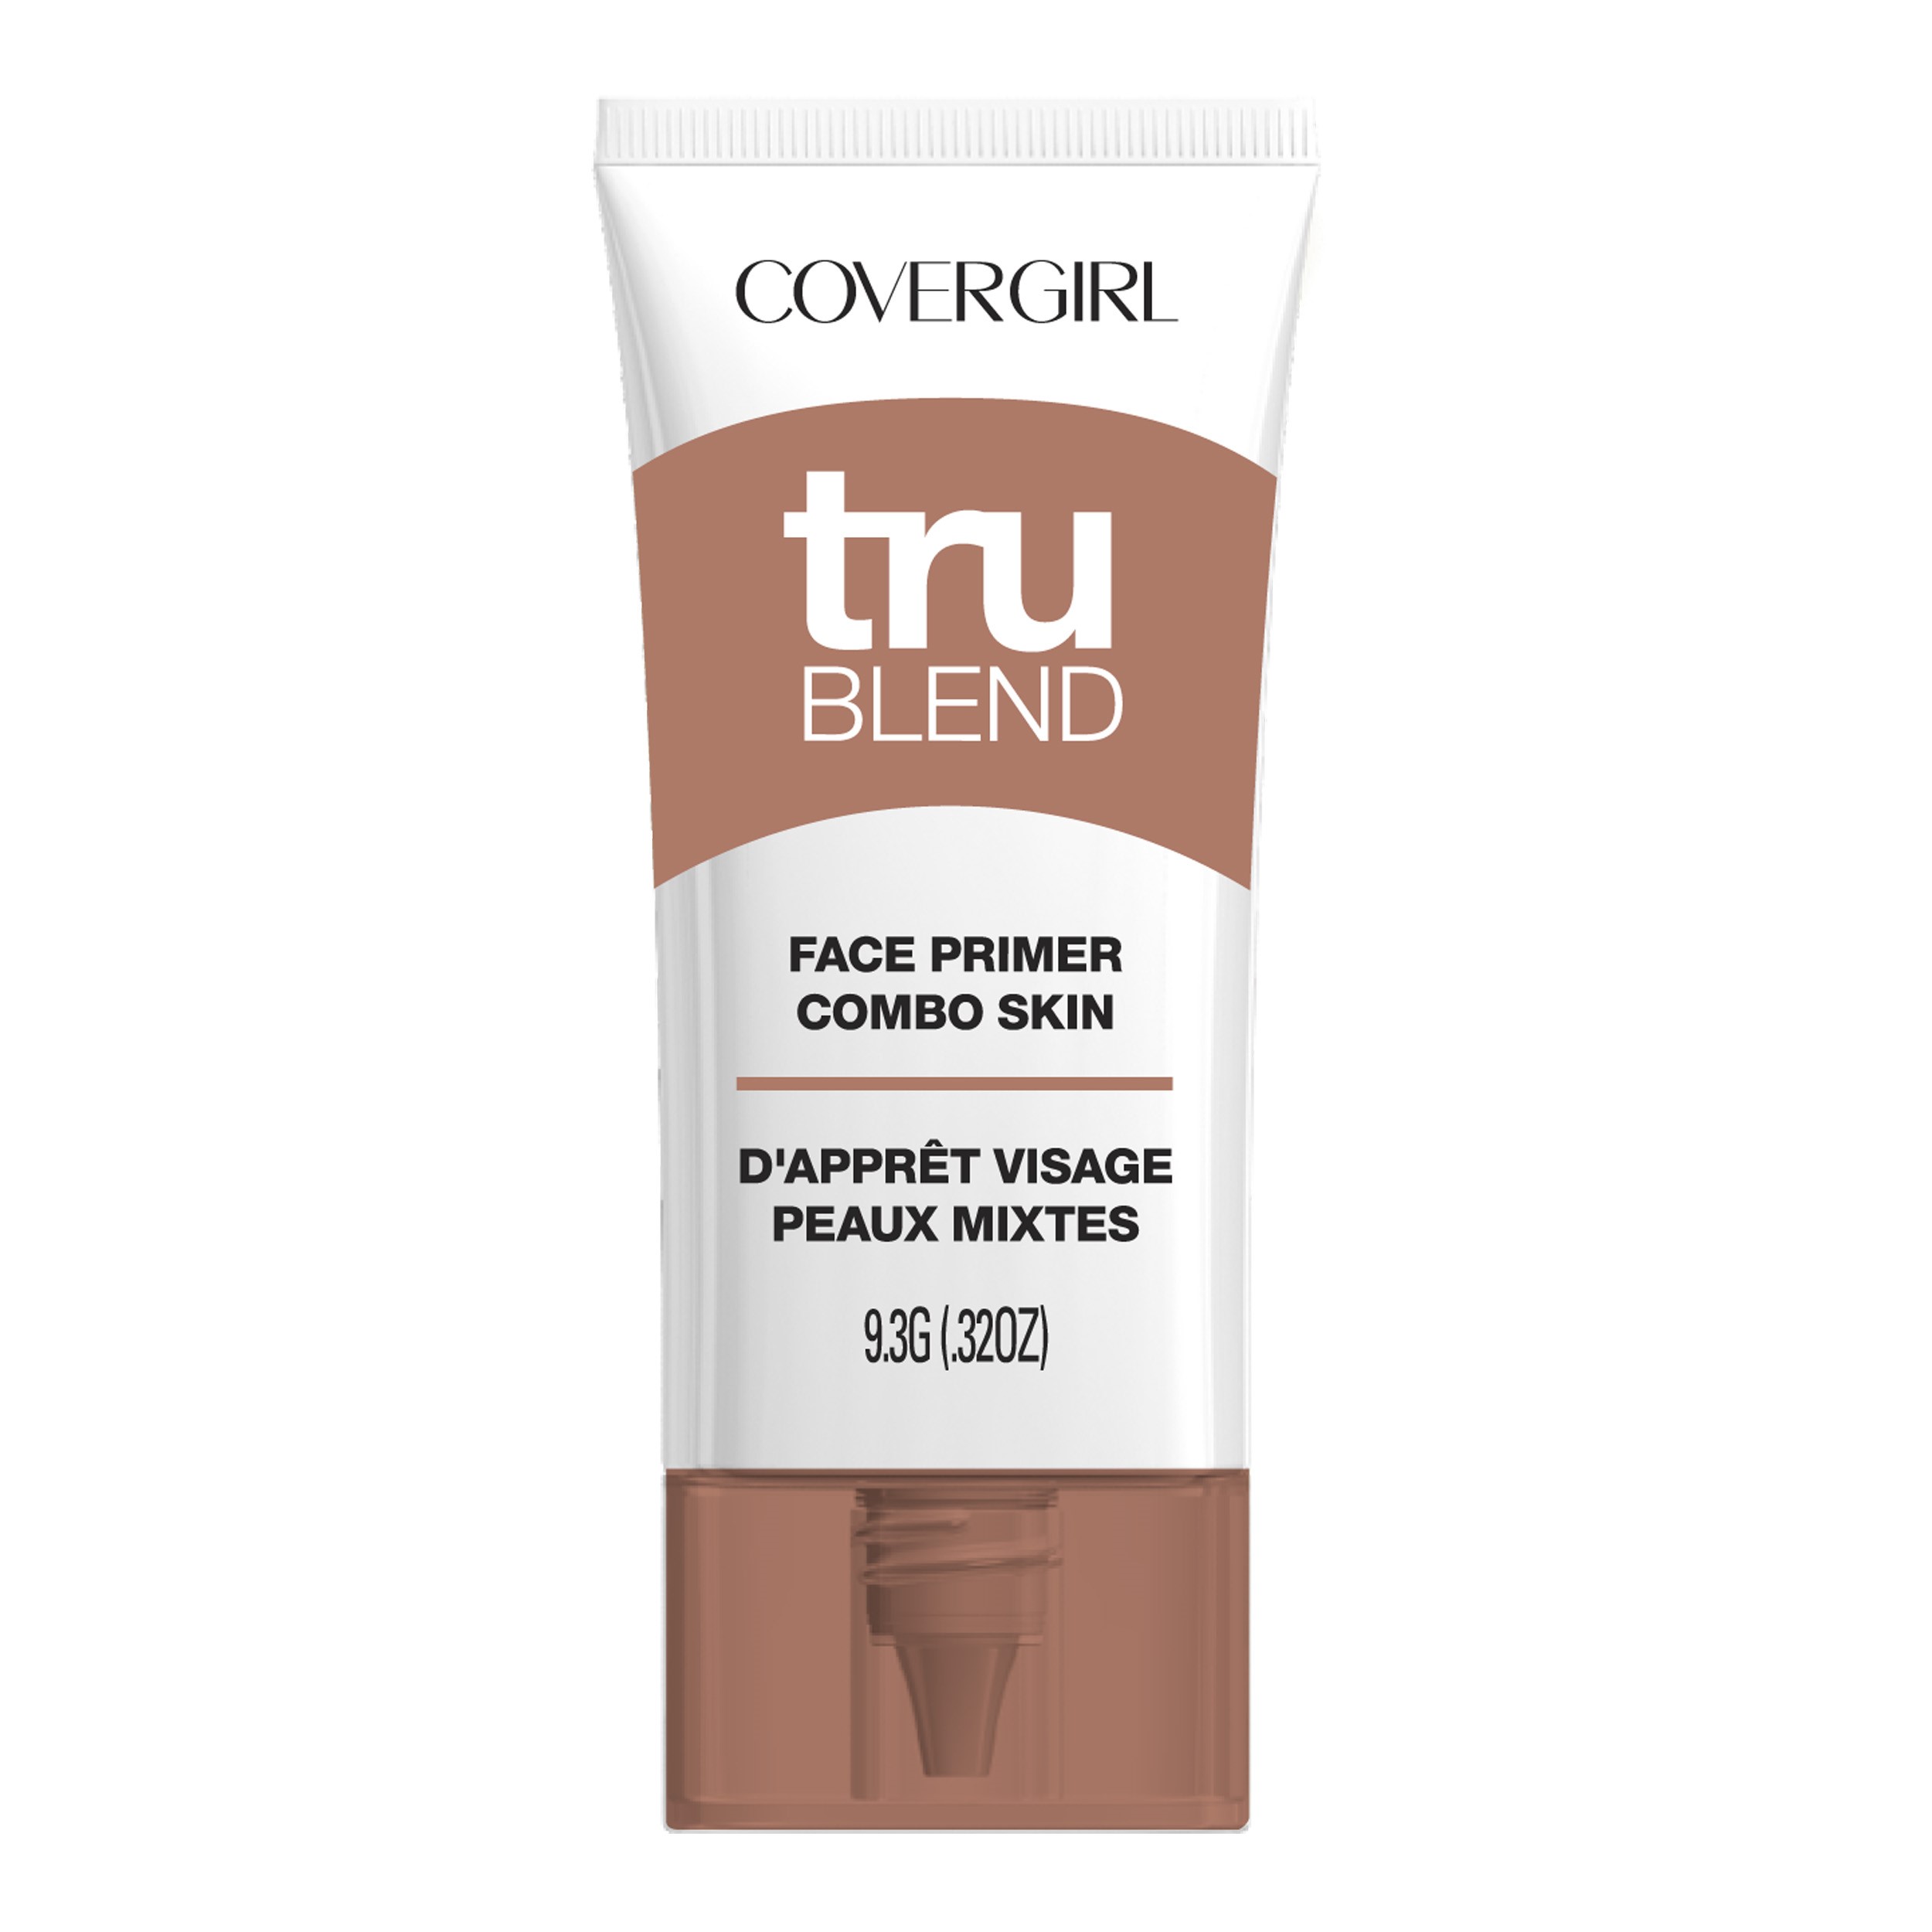 CoverGirl TruBlend Primer for Combo Skin, 1 Fl oz - image 1 of 2